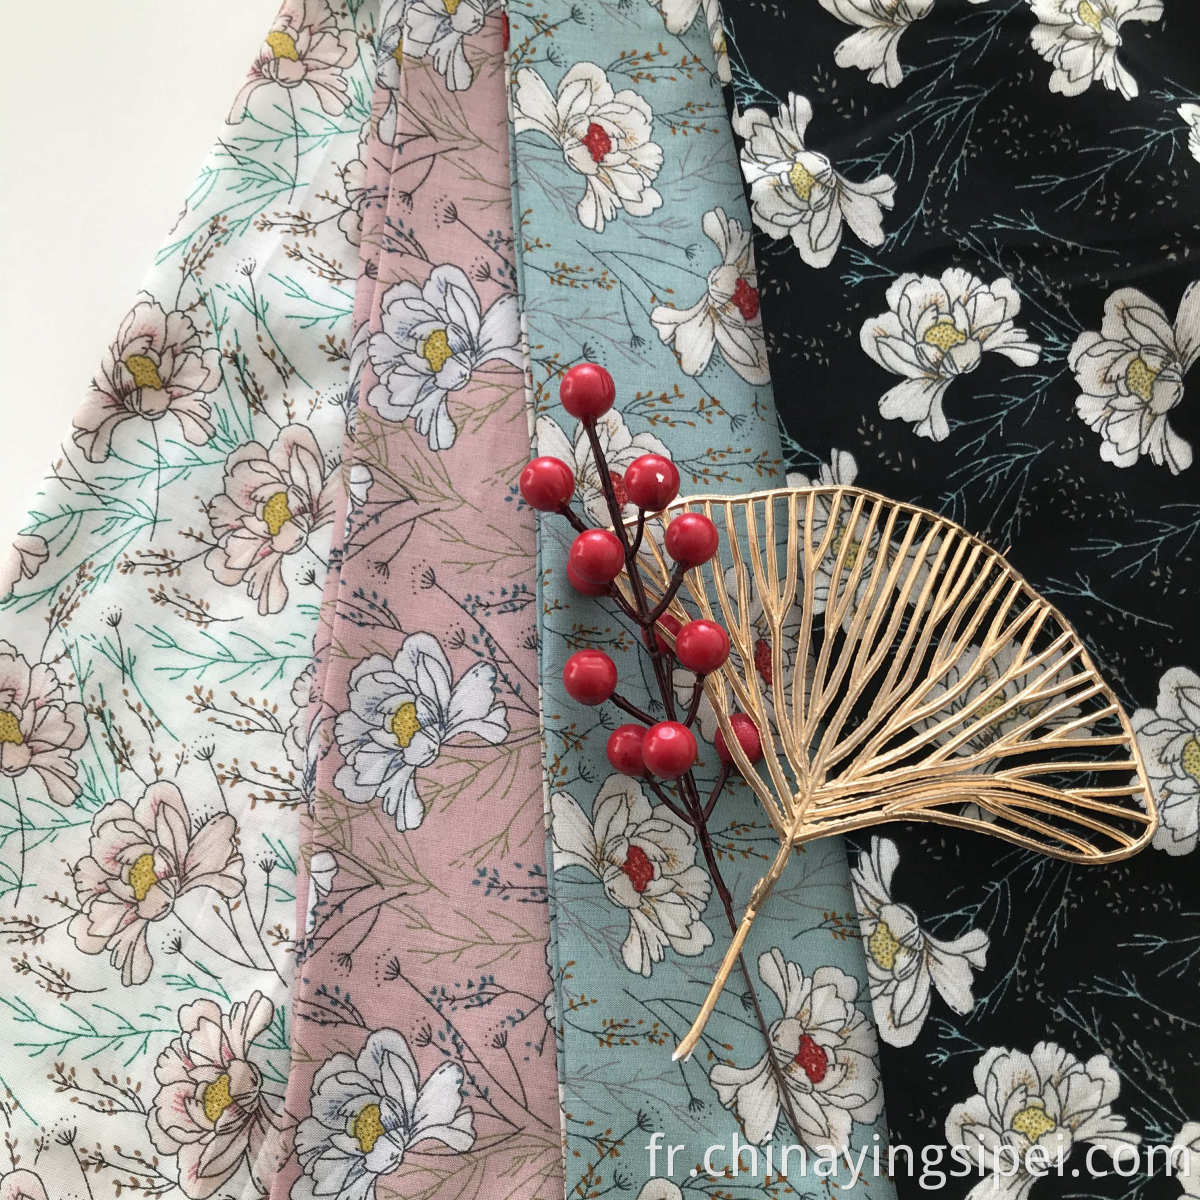 nouveau design tissu floral tissu de rayonne tissu de tissu en tissu en shaoxing pour robe